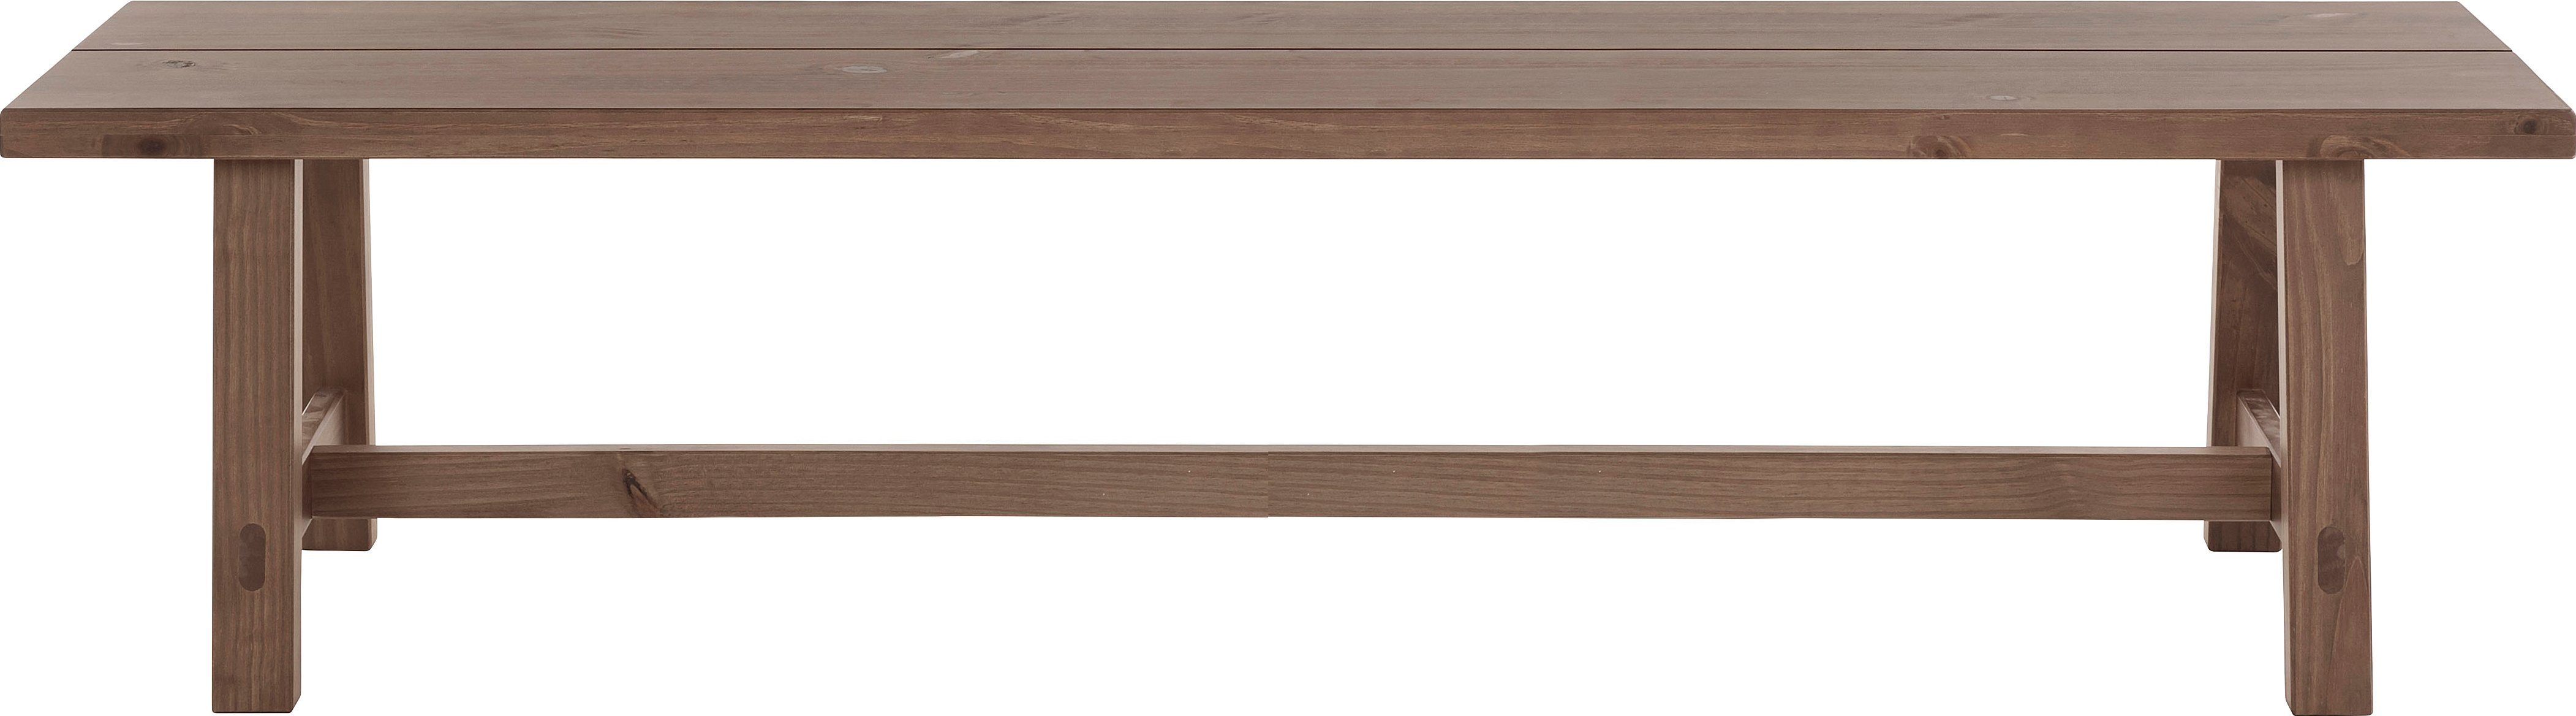 Timbers Eetbank Gainesville Zitoppervlak, frame van grenen, verschillende kleurvarianten, zithoogte 